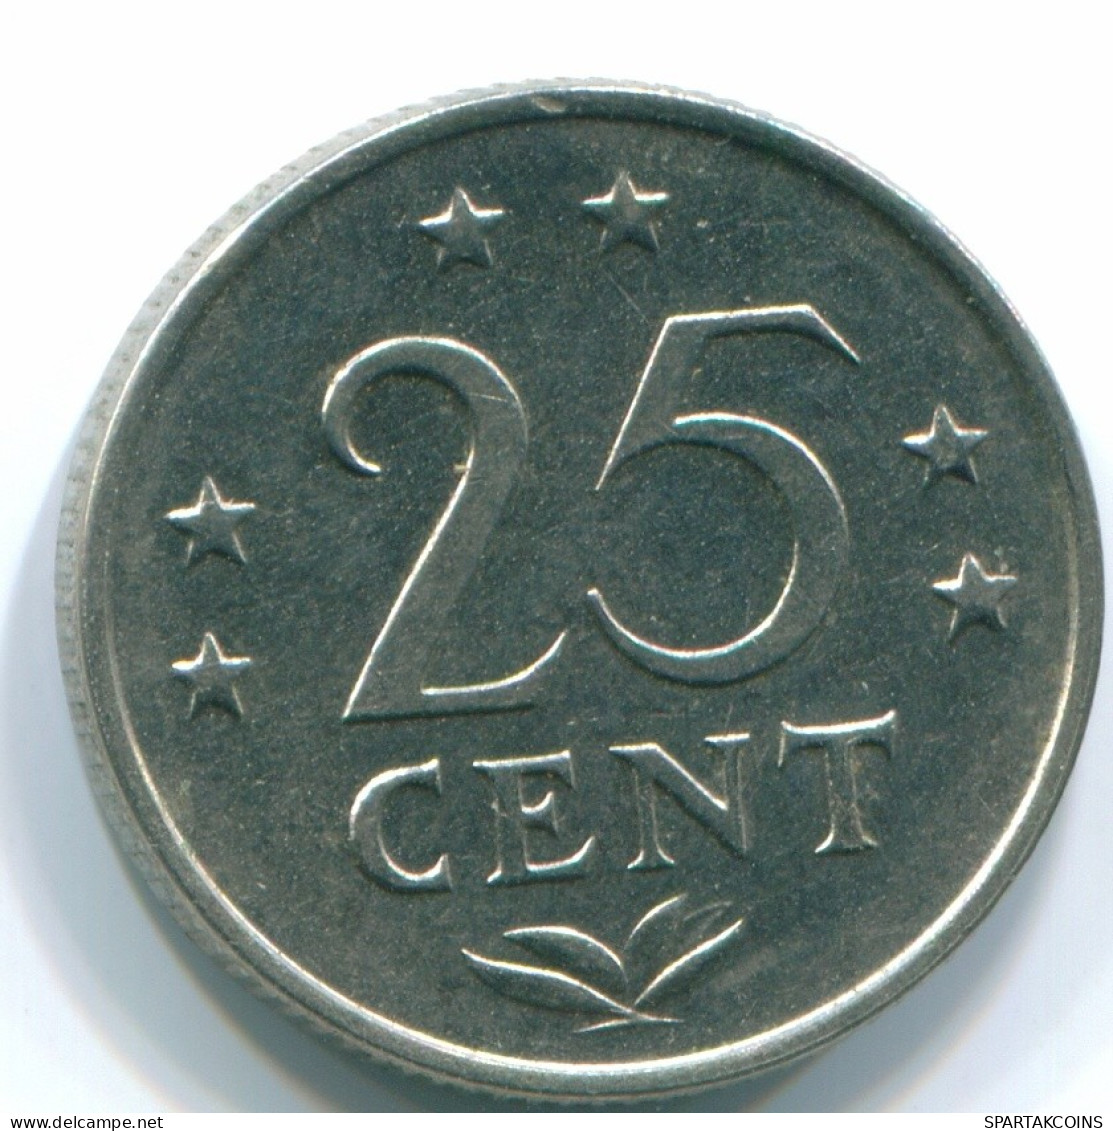 25 CENTS 1971 NETHERLANDS ANTILLES Nickel Colonial Coin #S11556.U.A - Antilles Néerlandaises